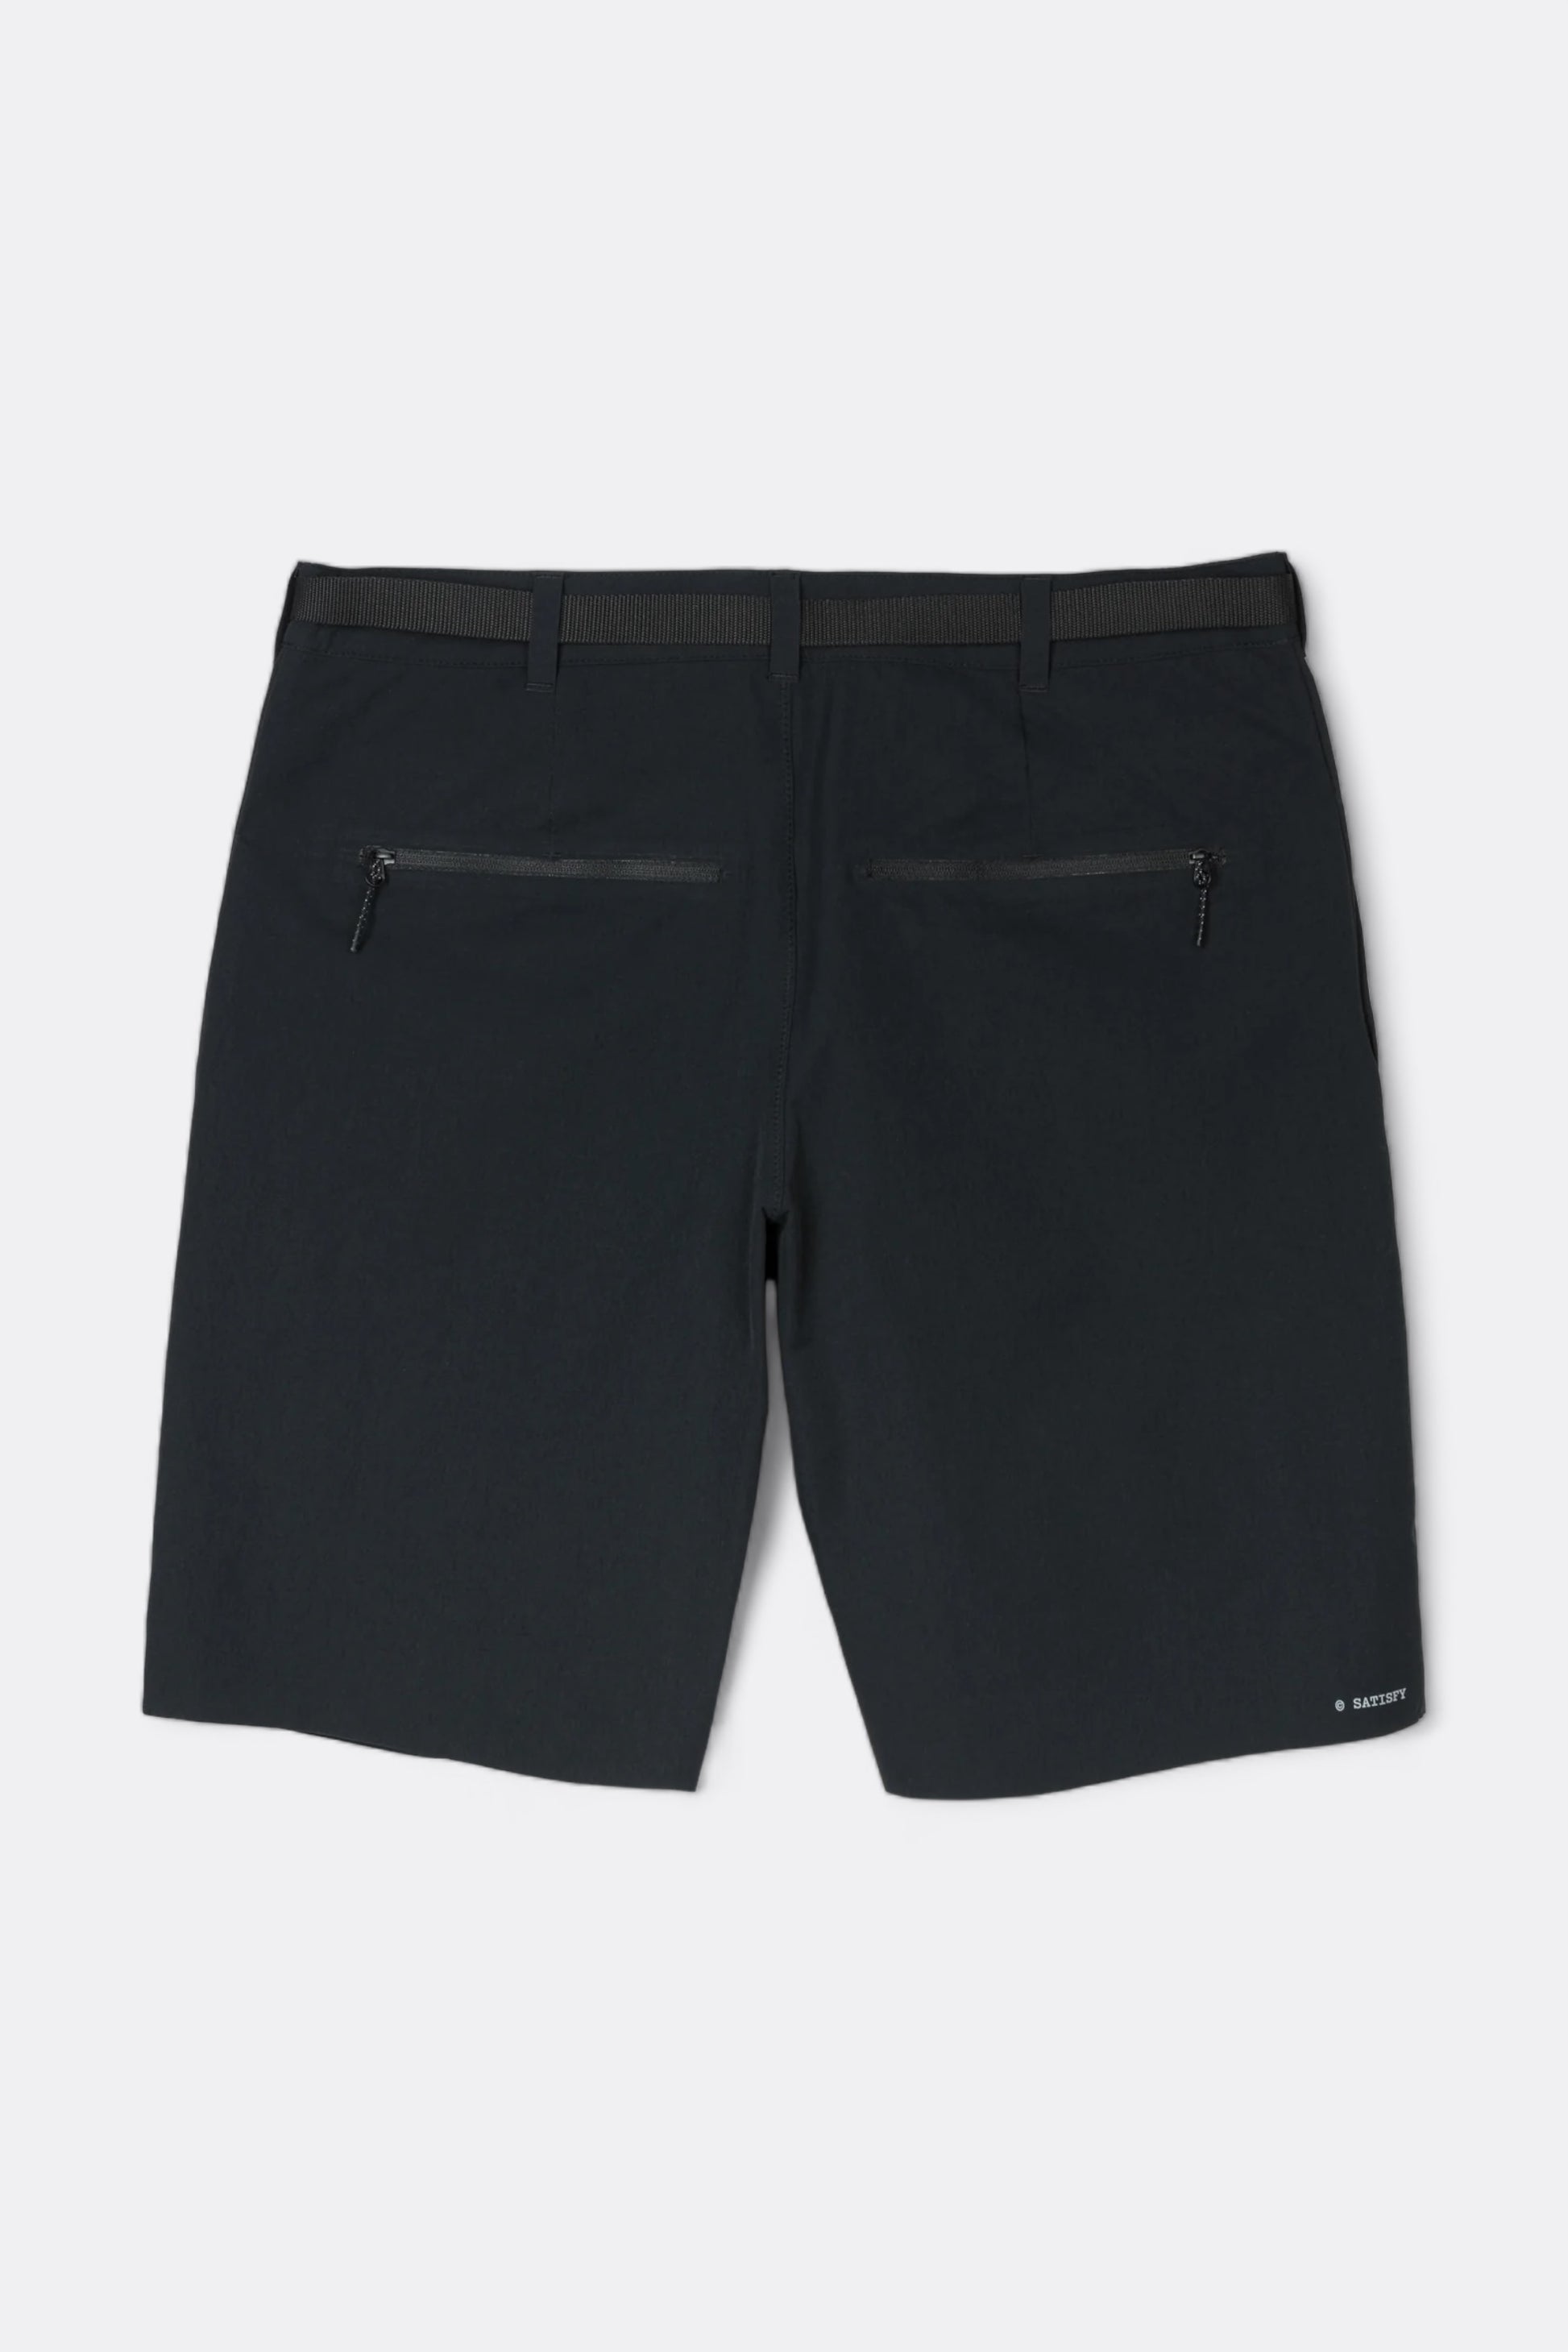 Satisfy - PeaceShell™ Standard Climb Shorts (Black)